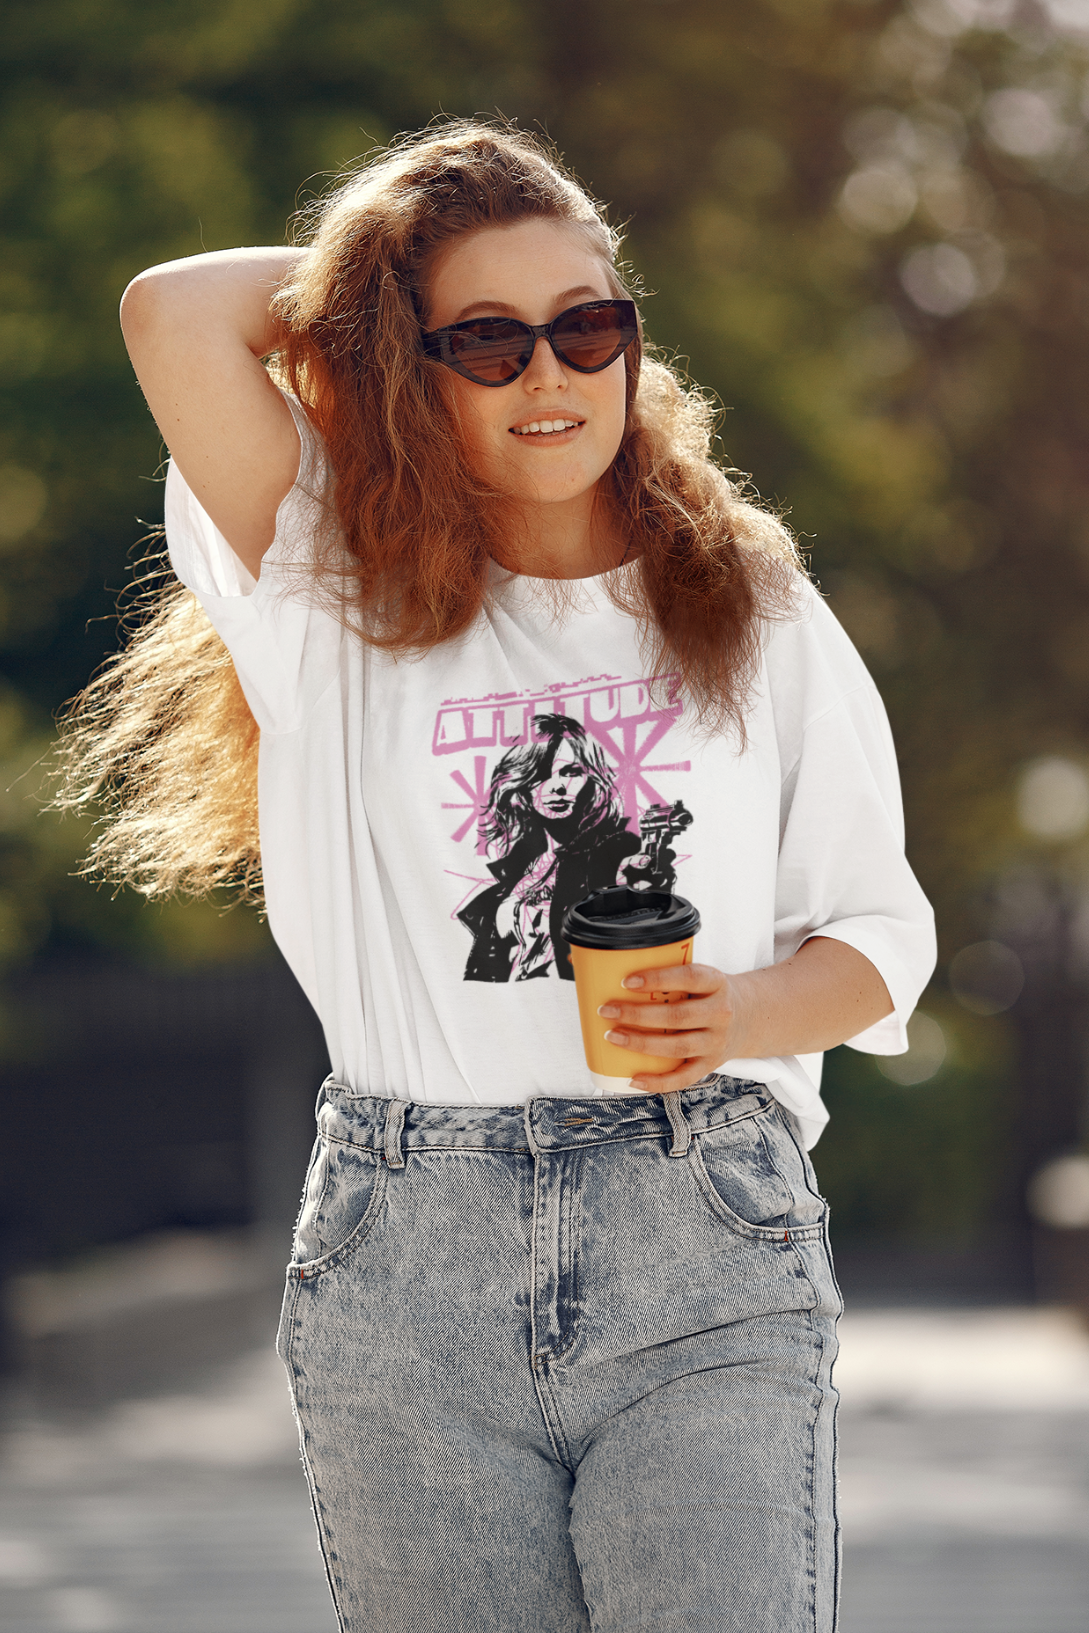 Attitude Matters Printed Oversized T-Shirt For Women - WowWaves - 5